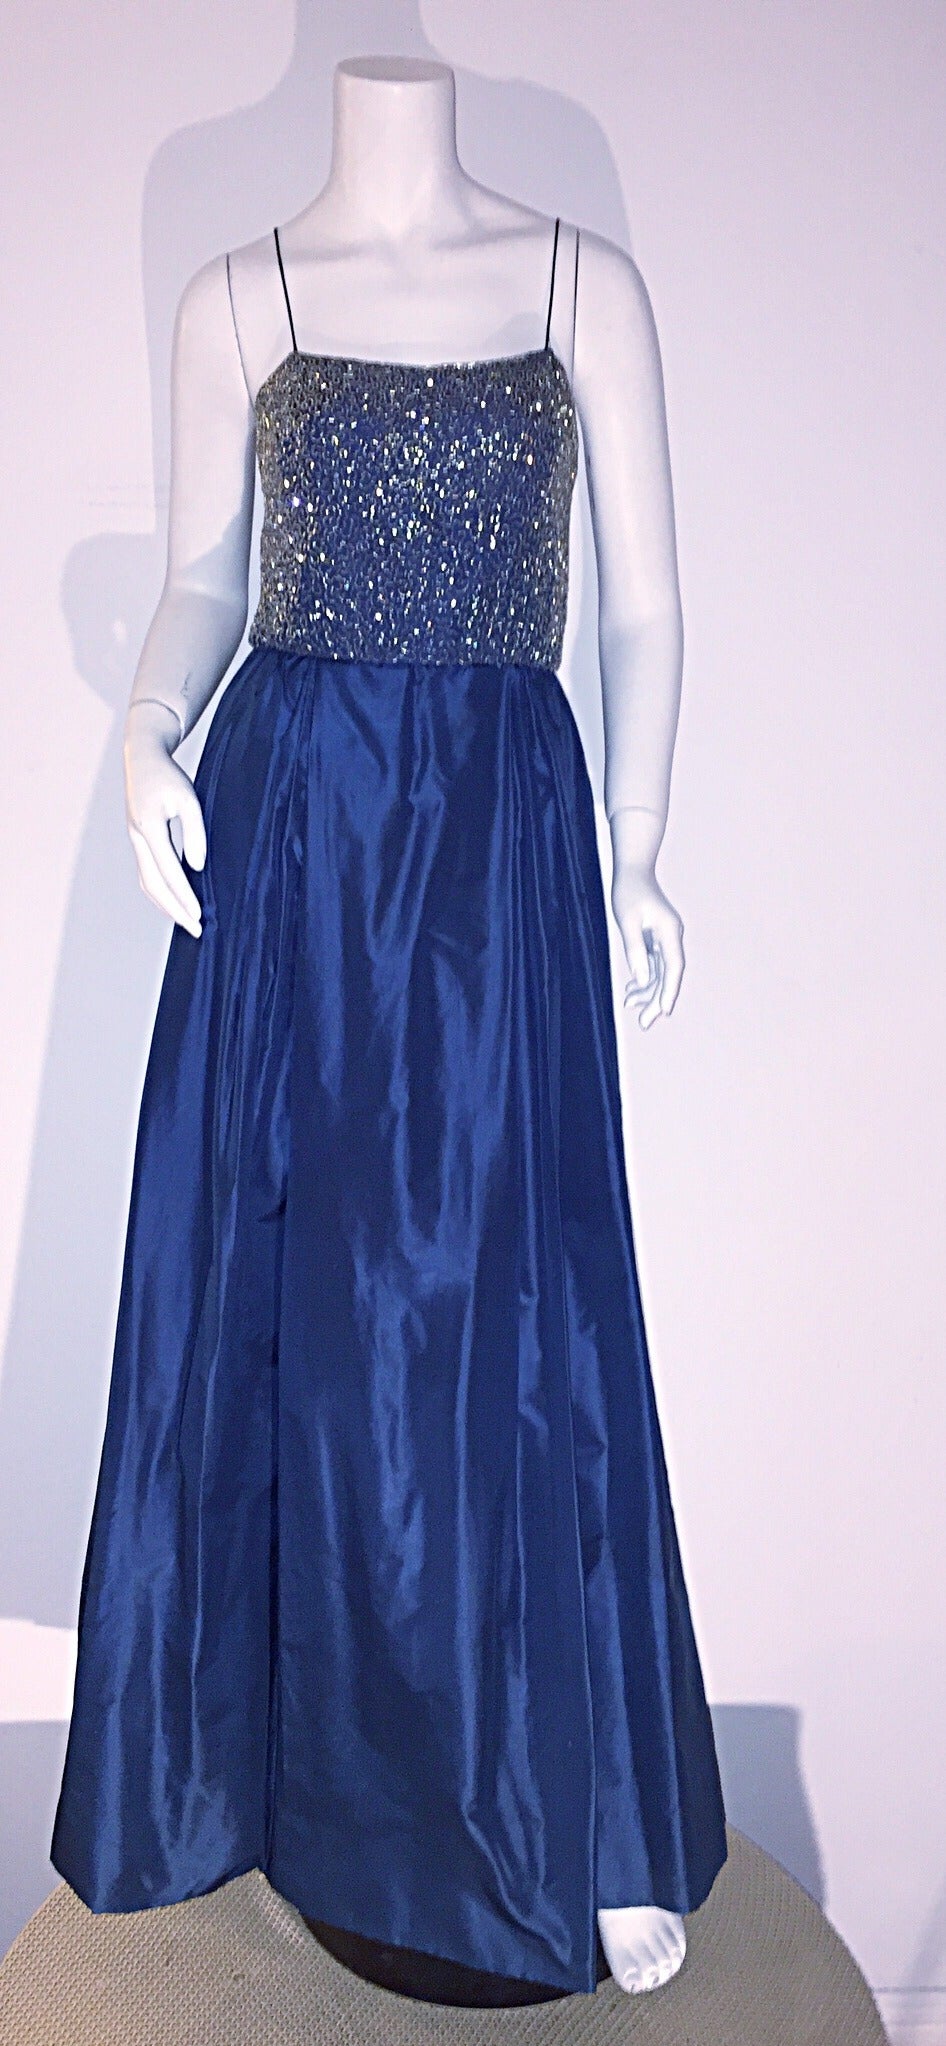 saks blue dress